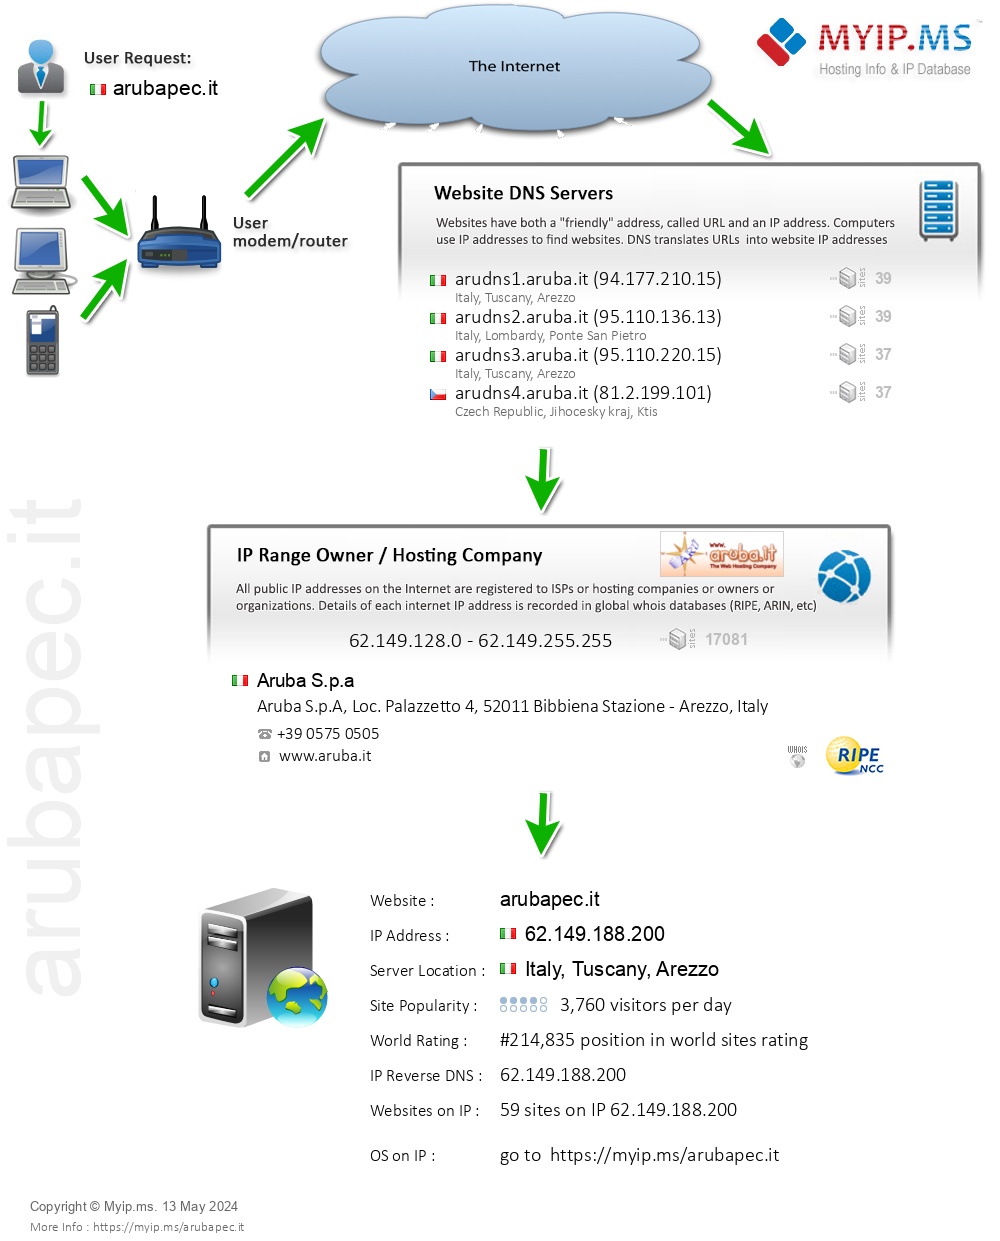 Arubapec.it - Website Hosting Visual IP Diagram